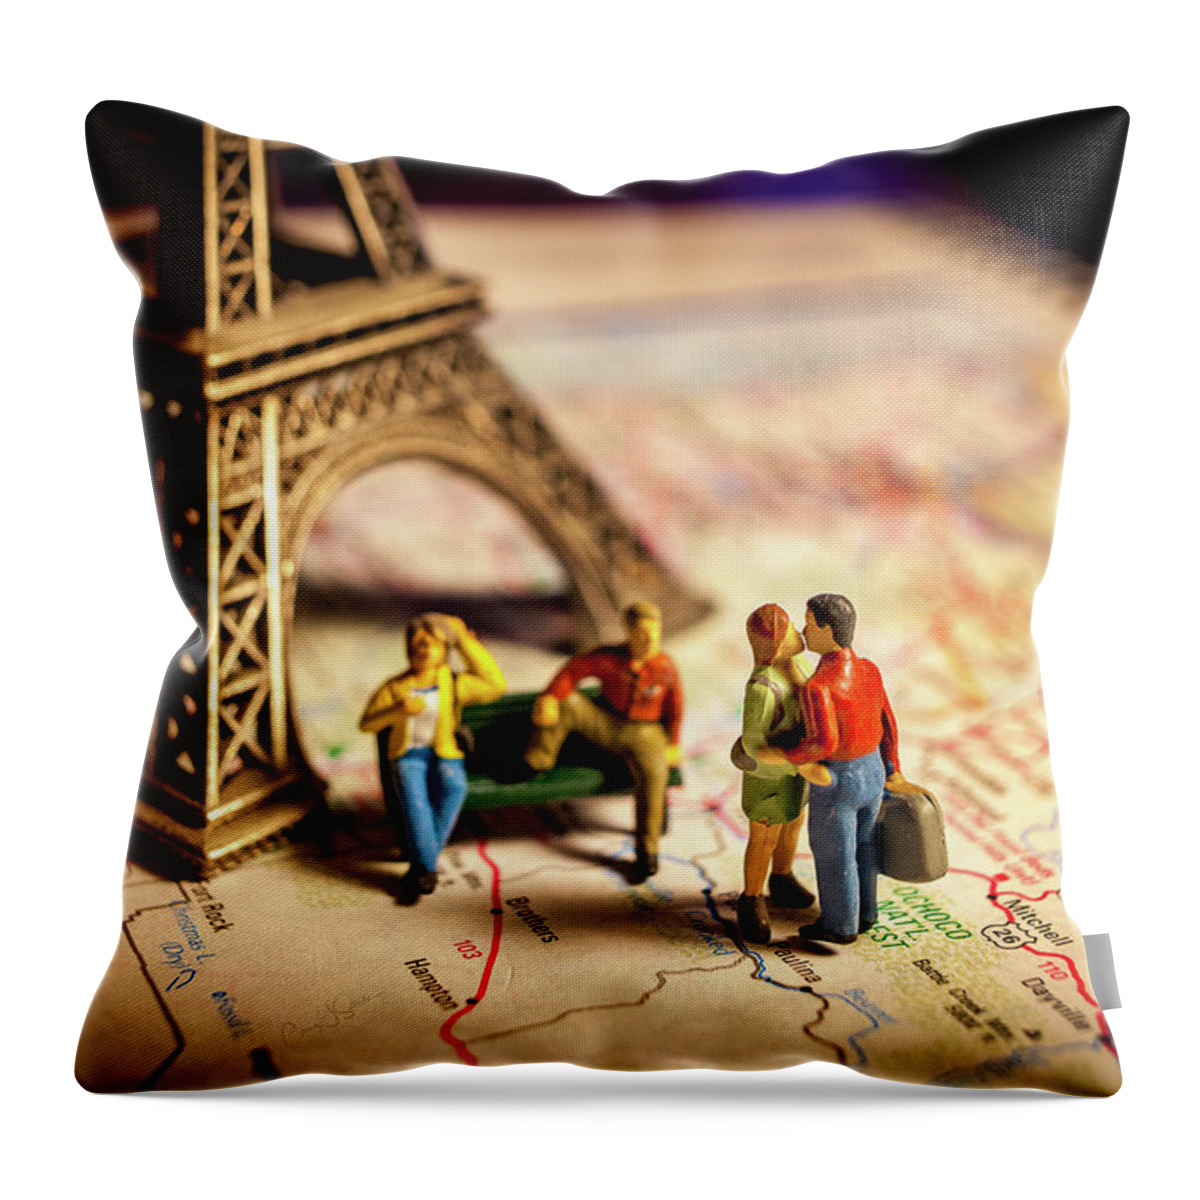 Paris Throw Pillow featuring the photograph Paris Lovers by Craig J Satterlee